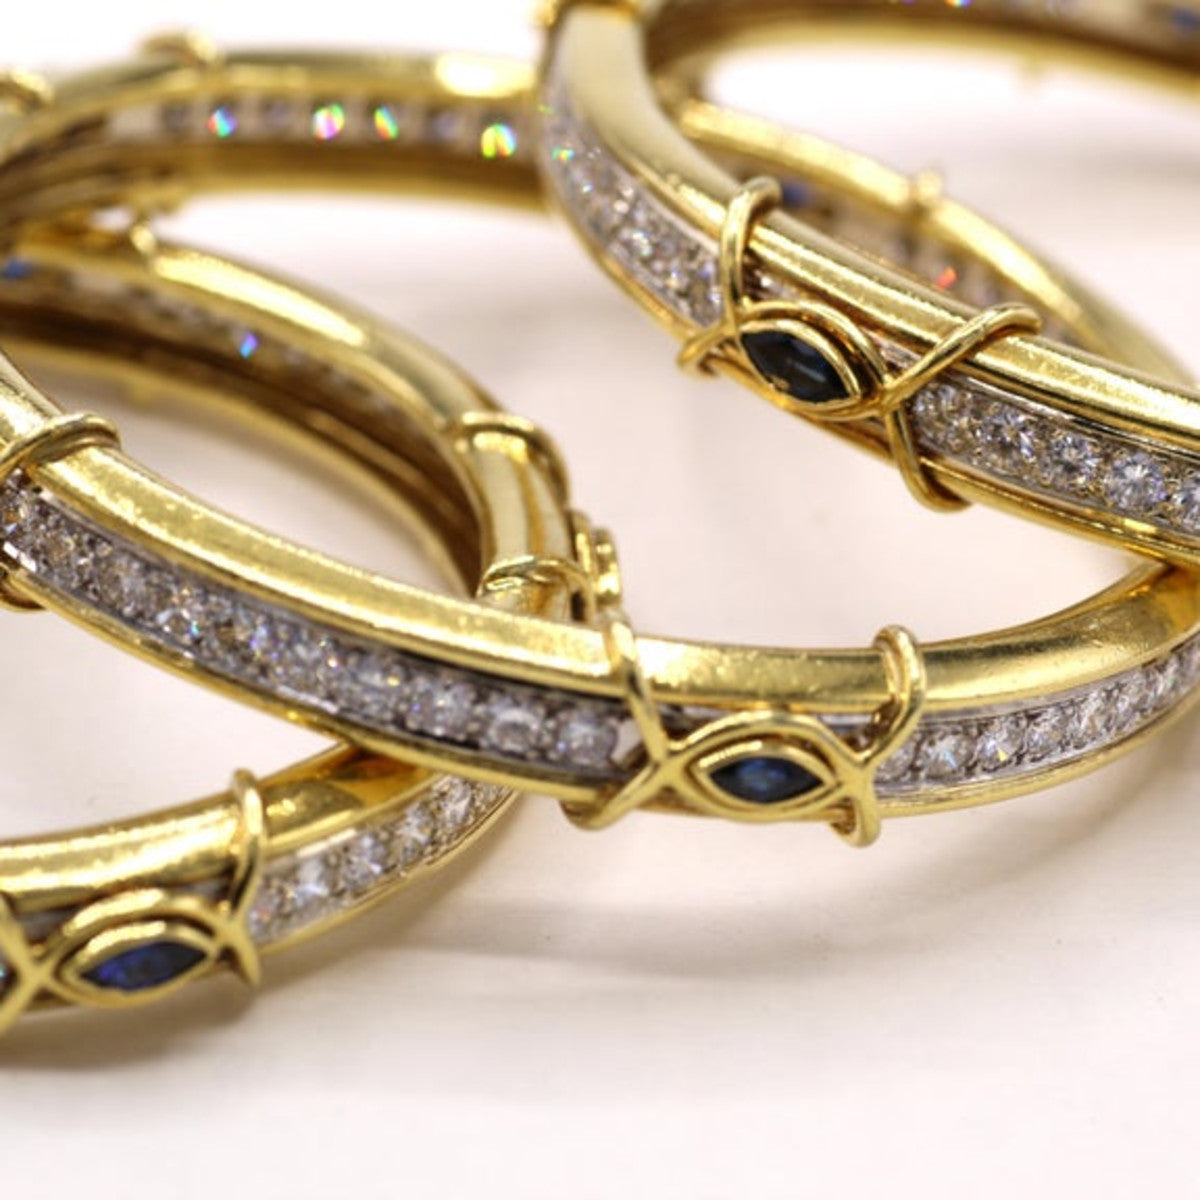 Boris Lebeau 1980s 18KT Yellow Gold Diamond & Sapphire Bangle Bracelets close-up details